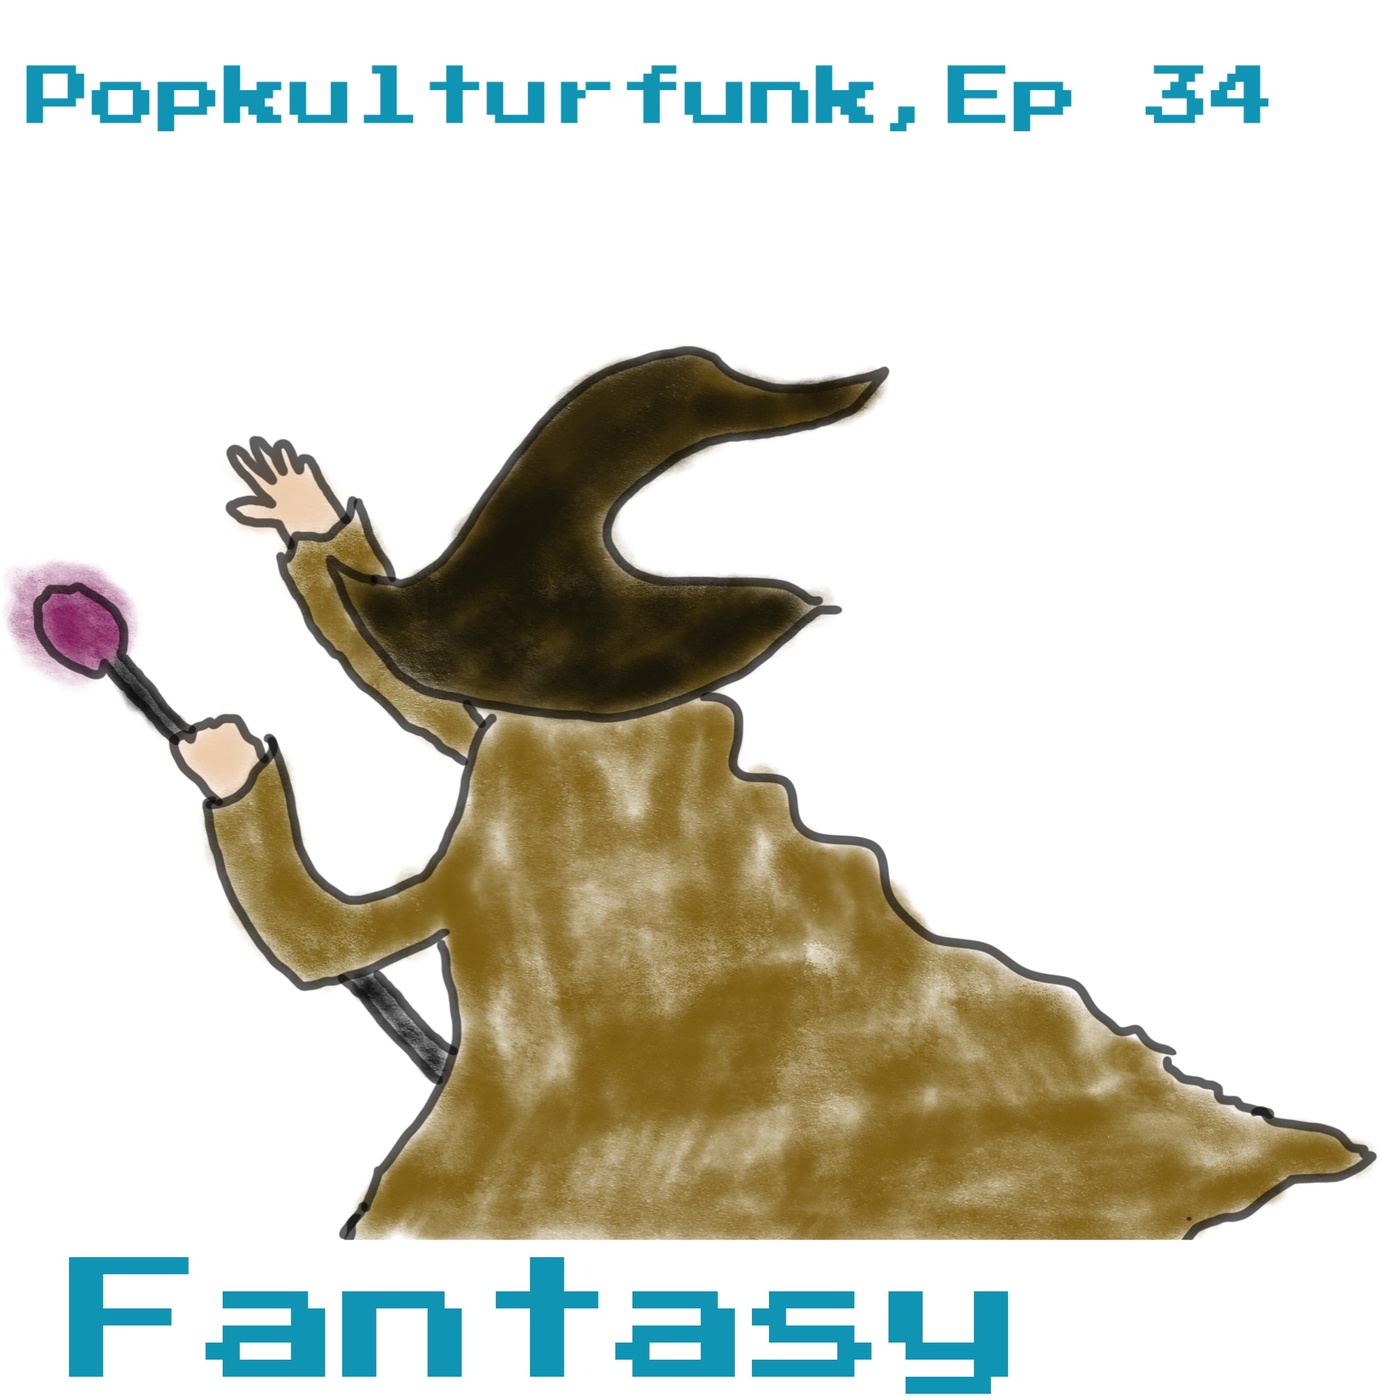 Episode 34: Fantasy